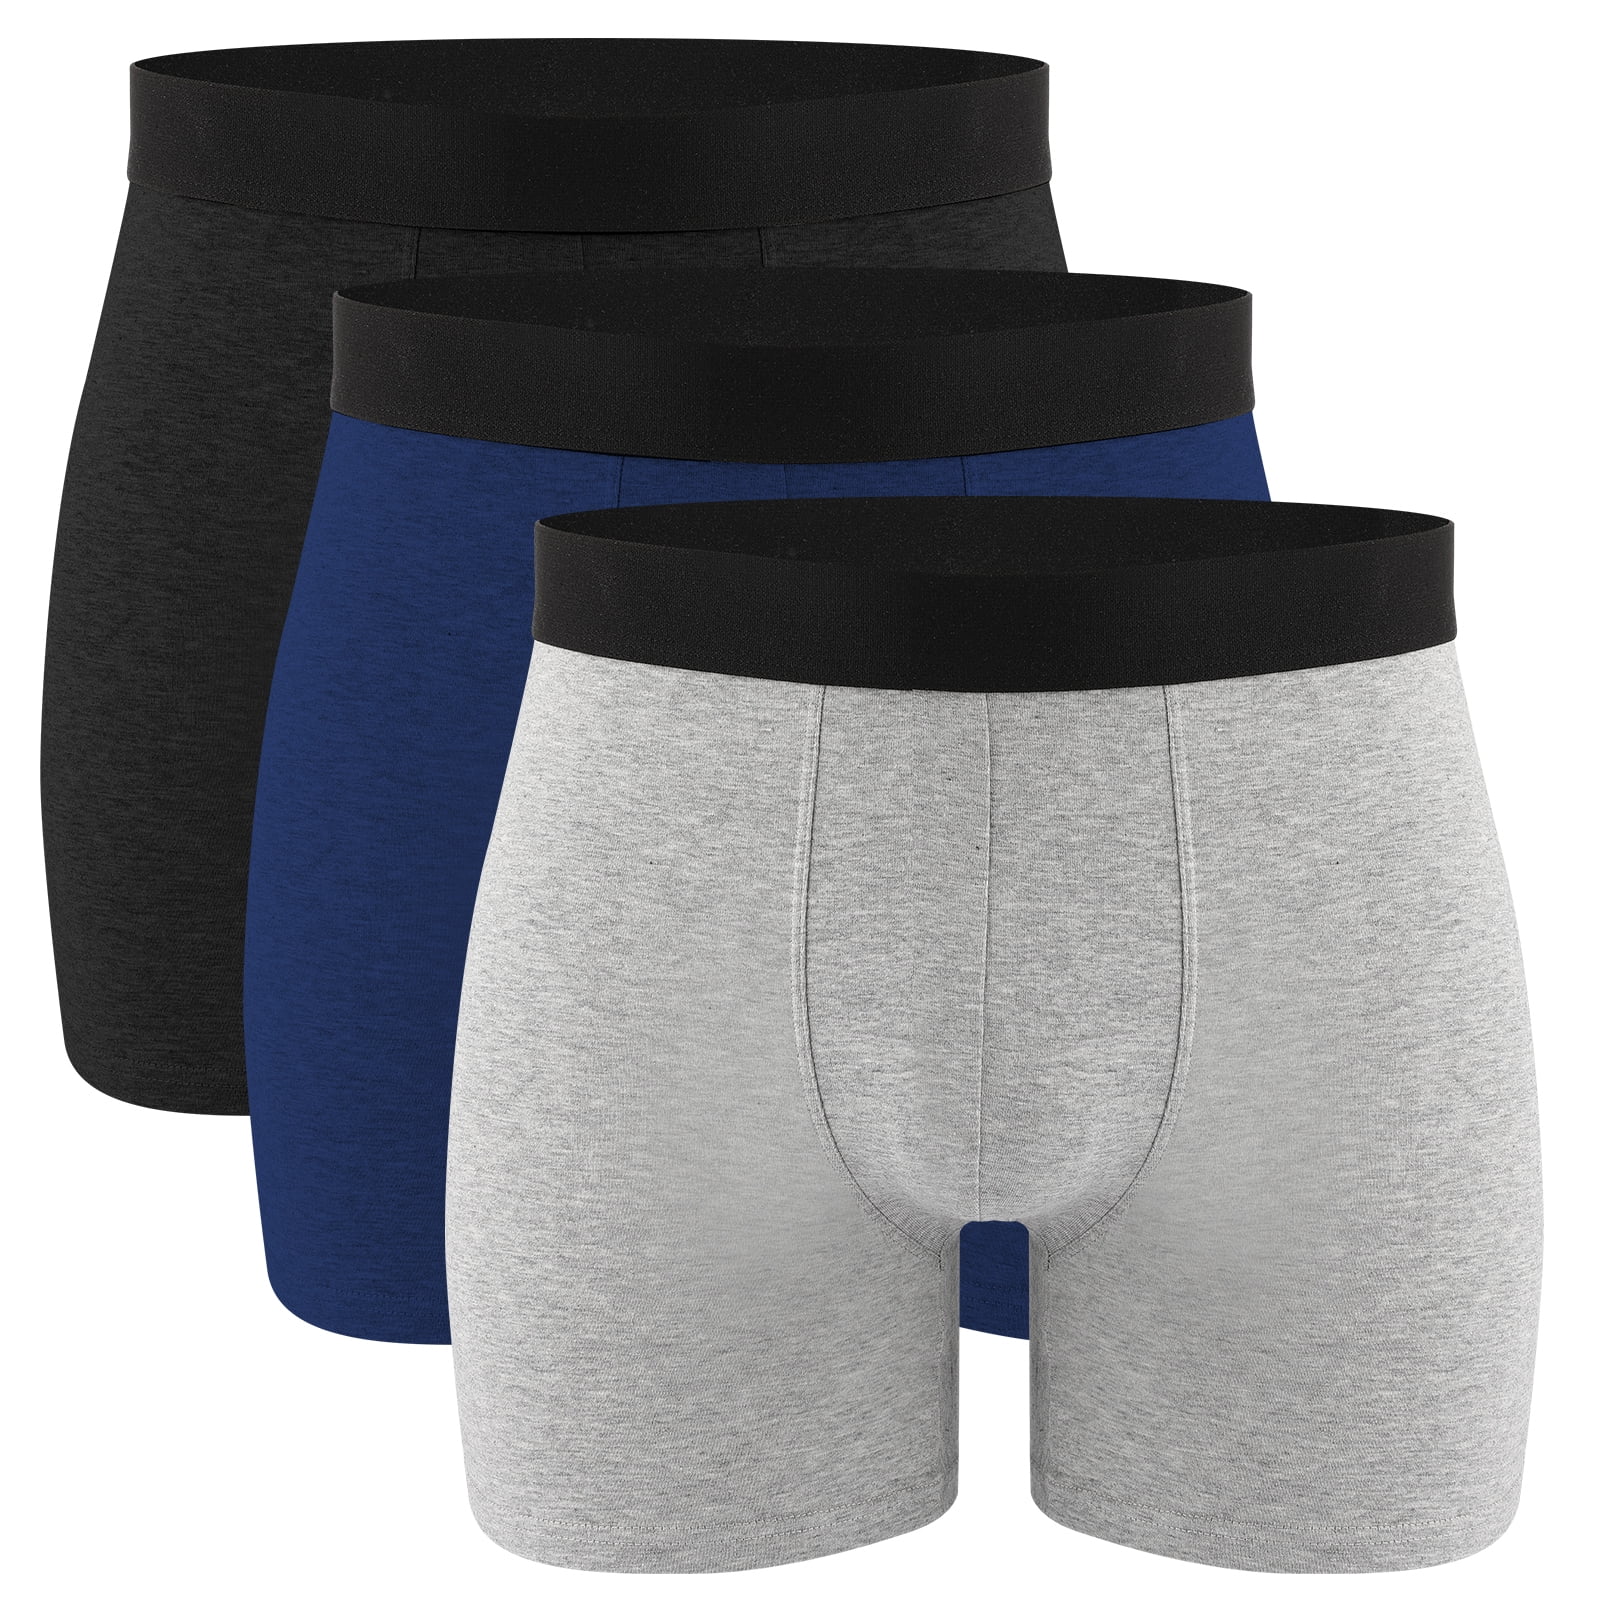 EALLCO Men's Underwear Boxer Briefs Cotton Stretch Comfortable ...